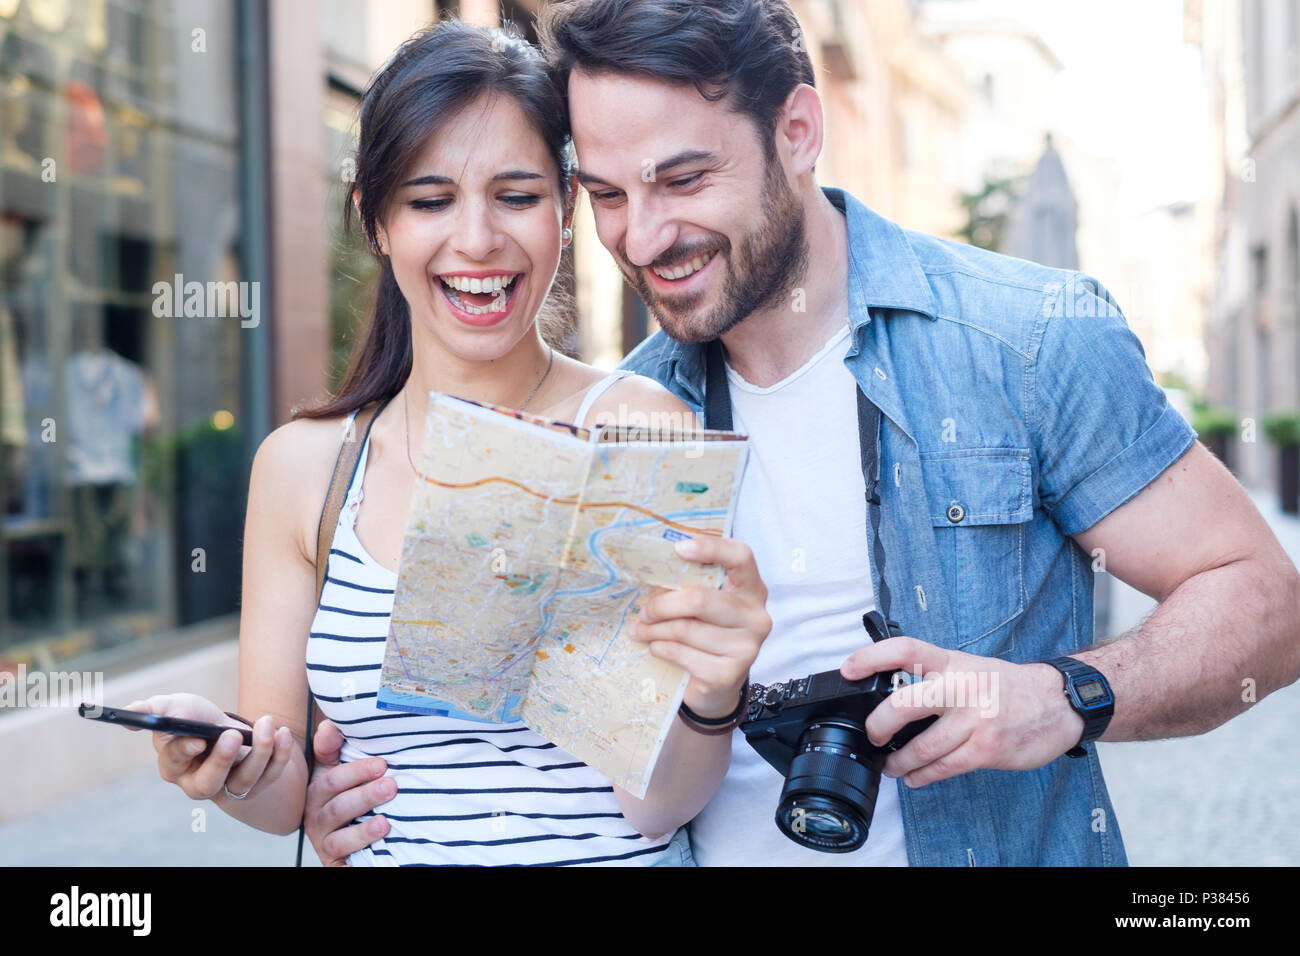 Young happy tourist couple visiting travel destination city Stock Photo